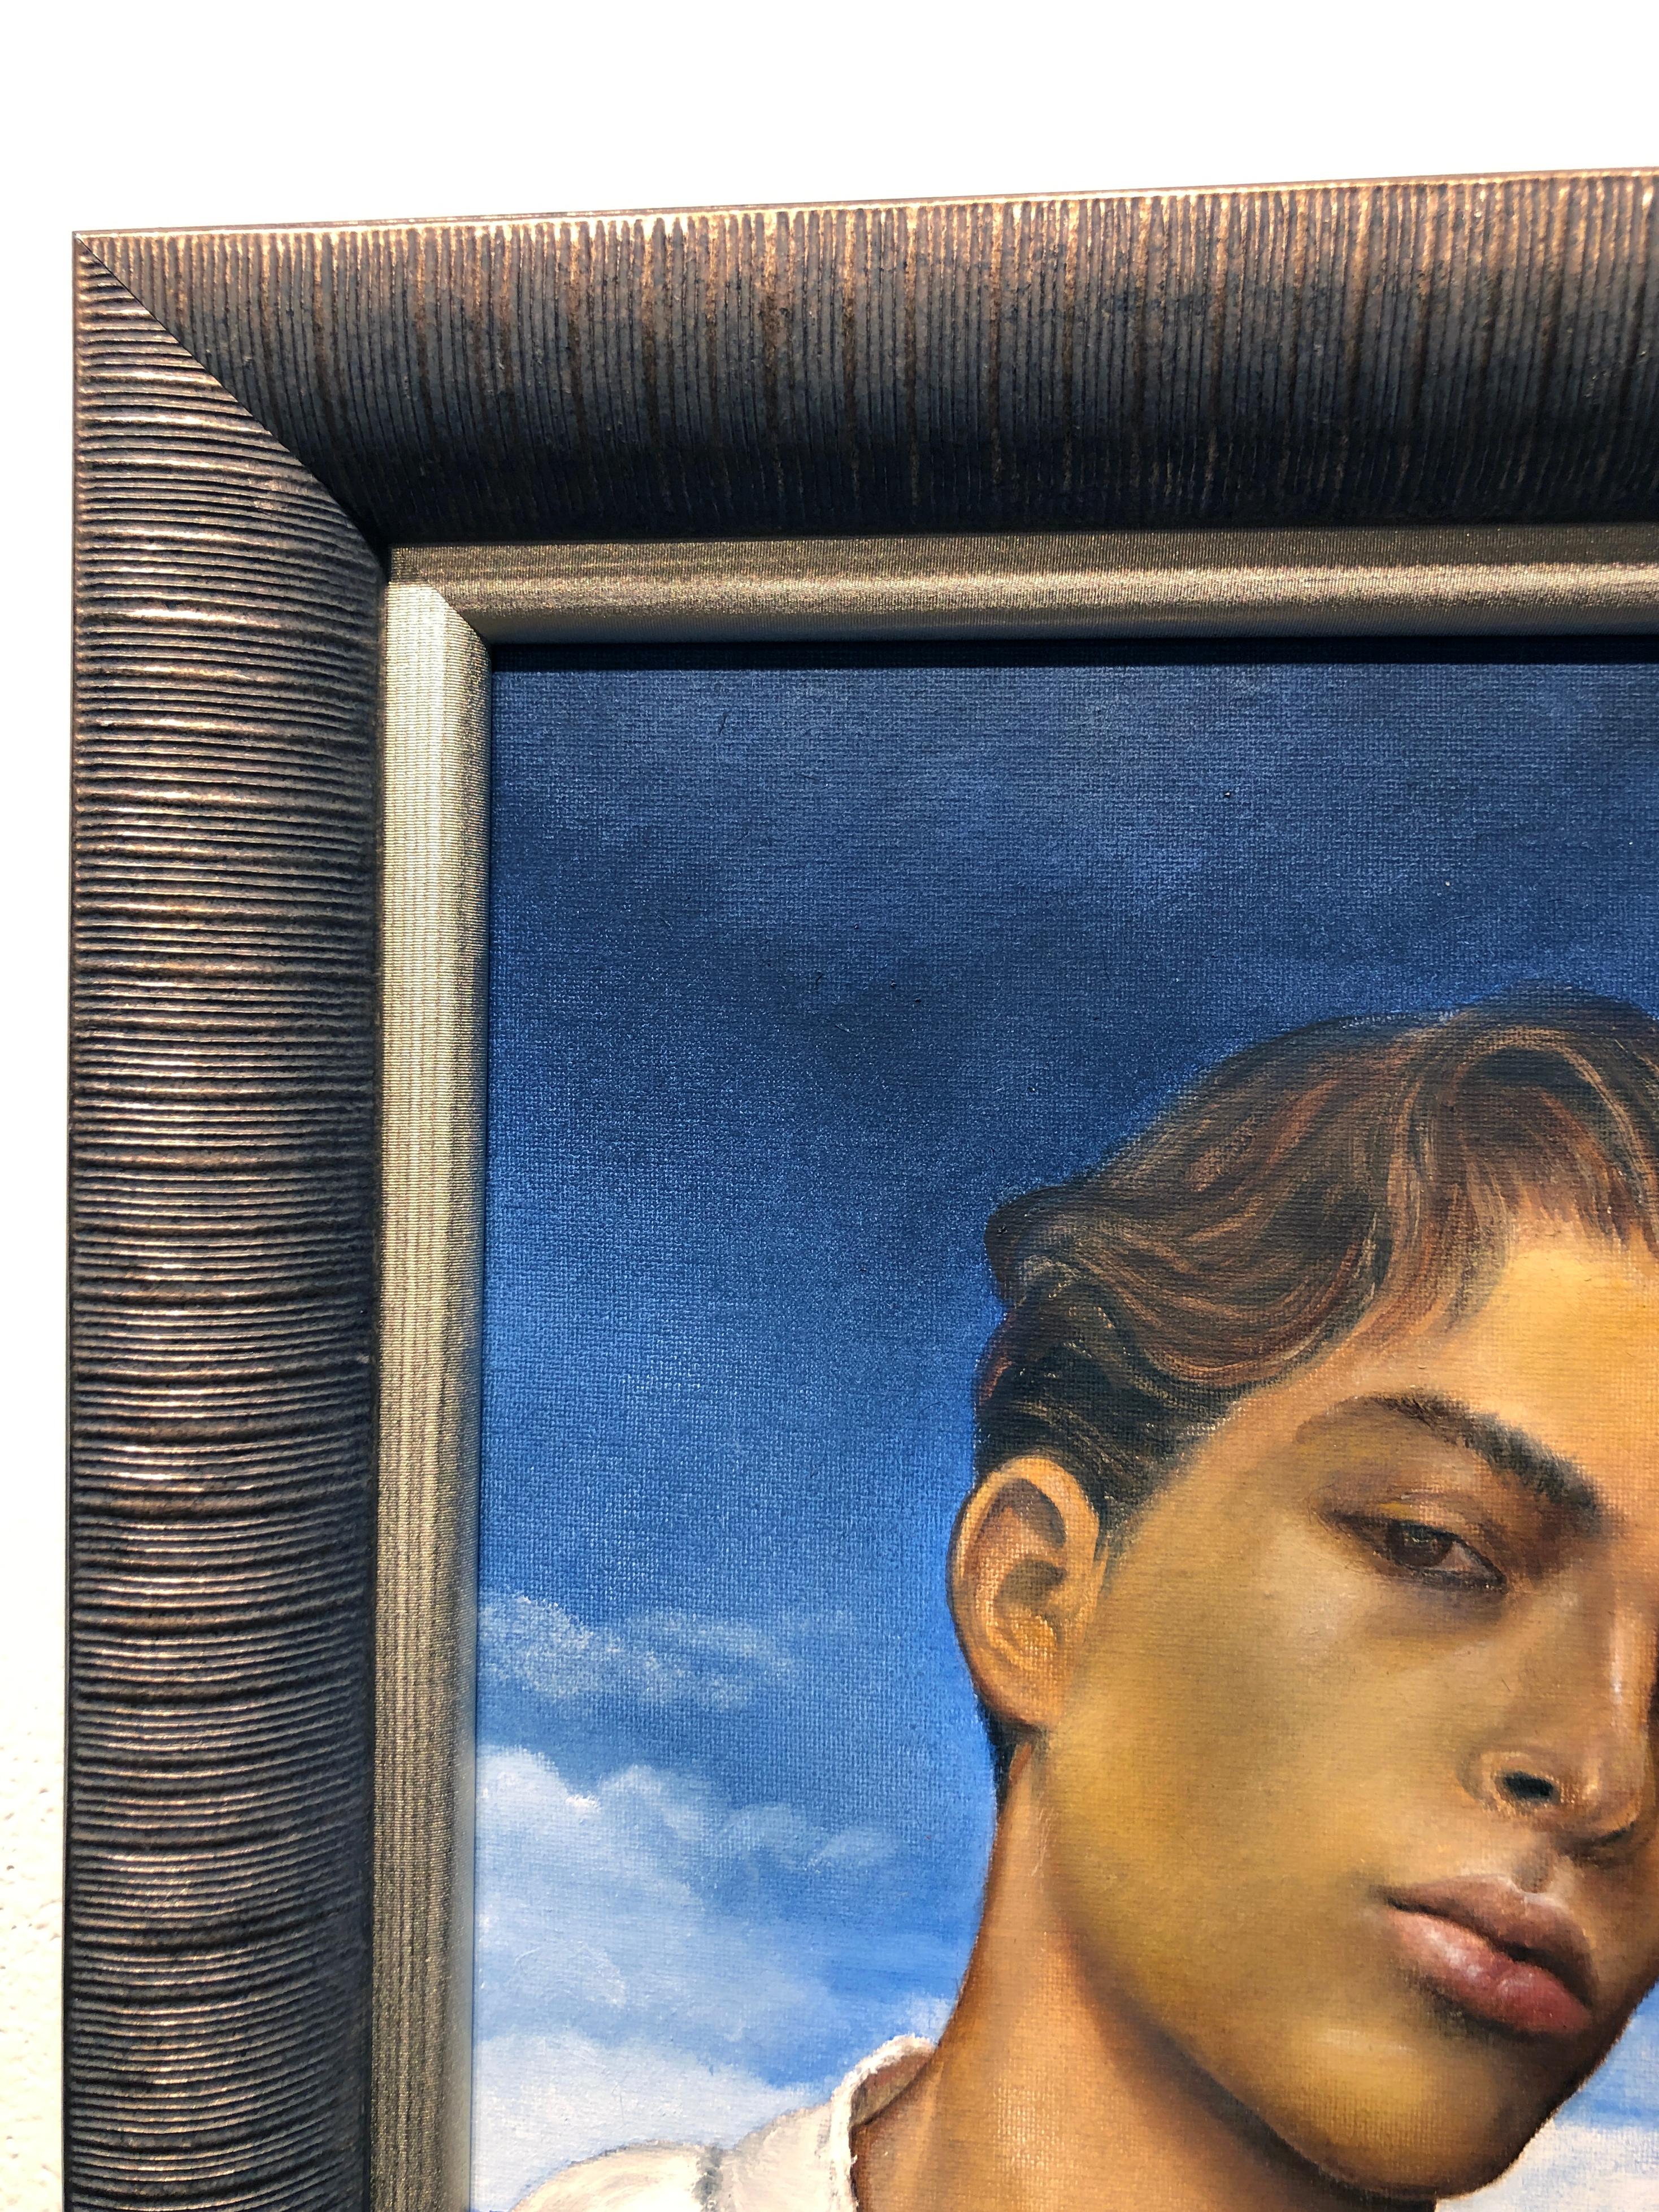 Youth, Portrait of Young Male, Renaissance Style Portraiture, Original Oil For Sale 1